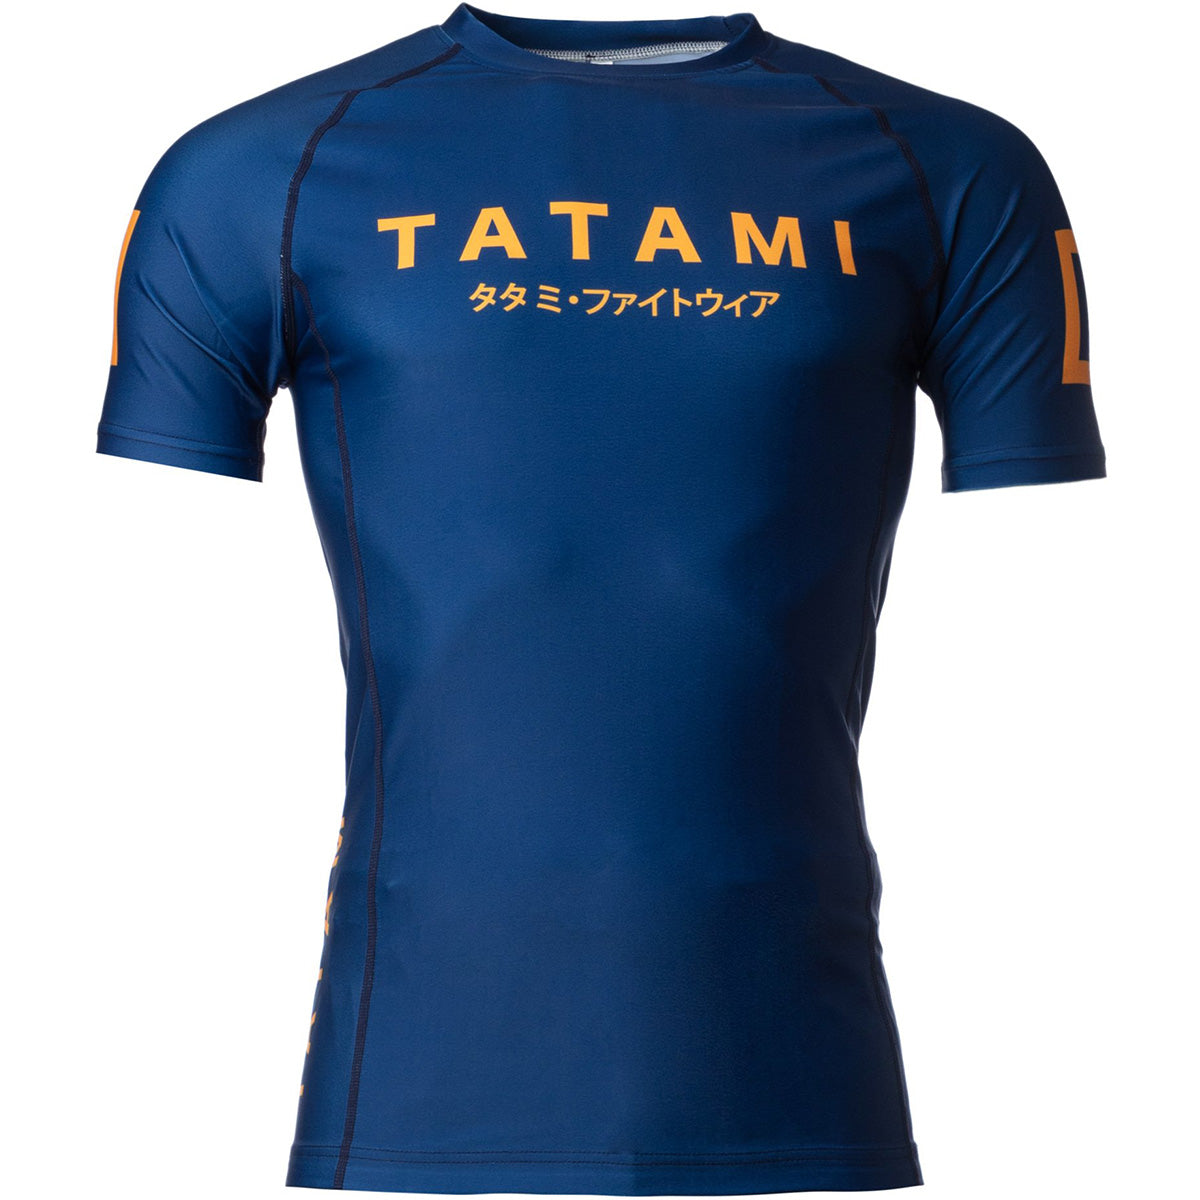 Tatami Fightwear Katakana Short Sleeve Rashguard - Navy Tatami Fightwear